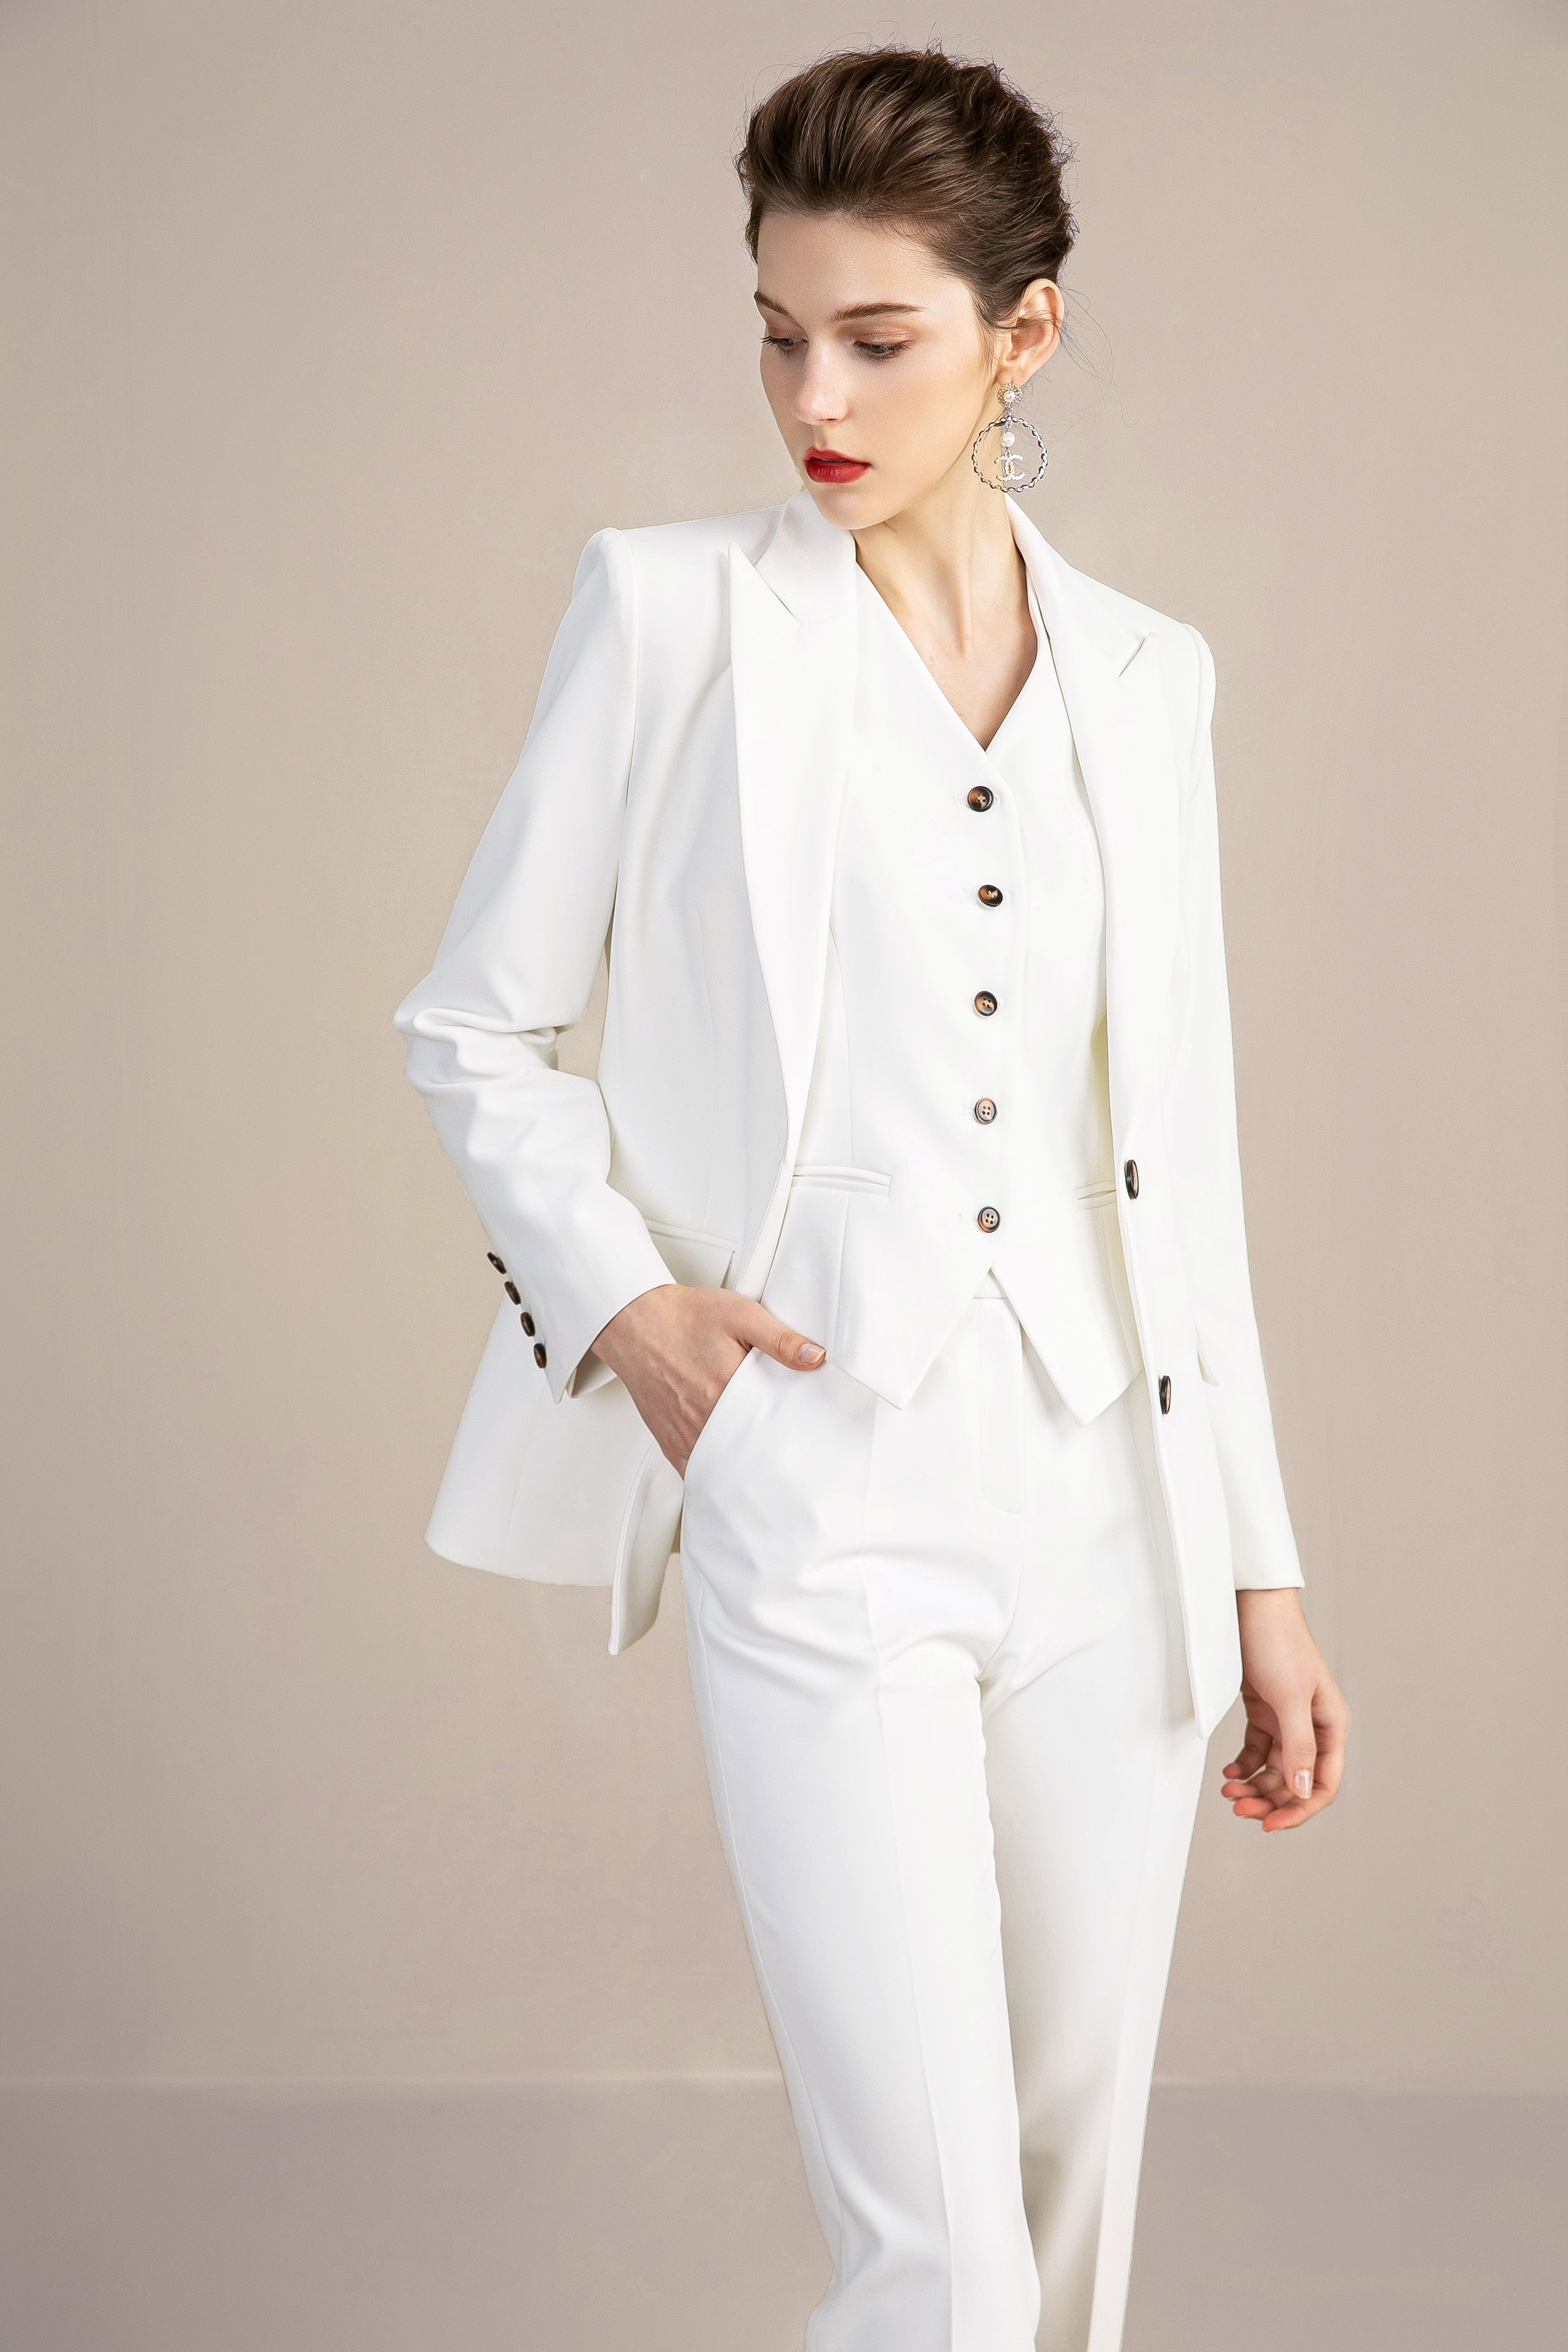 White pants suit for women